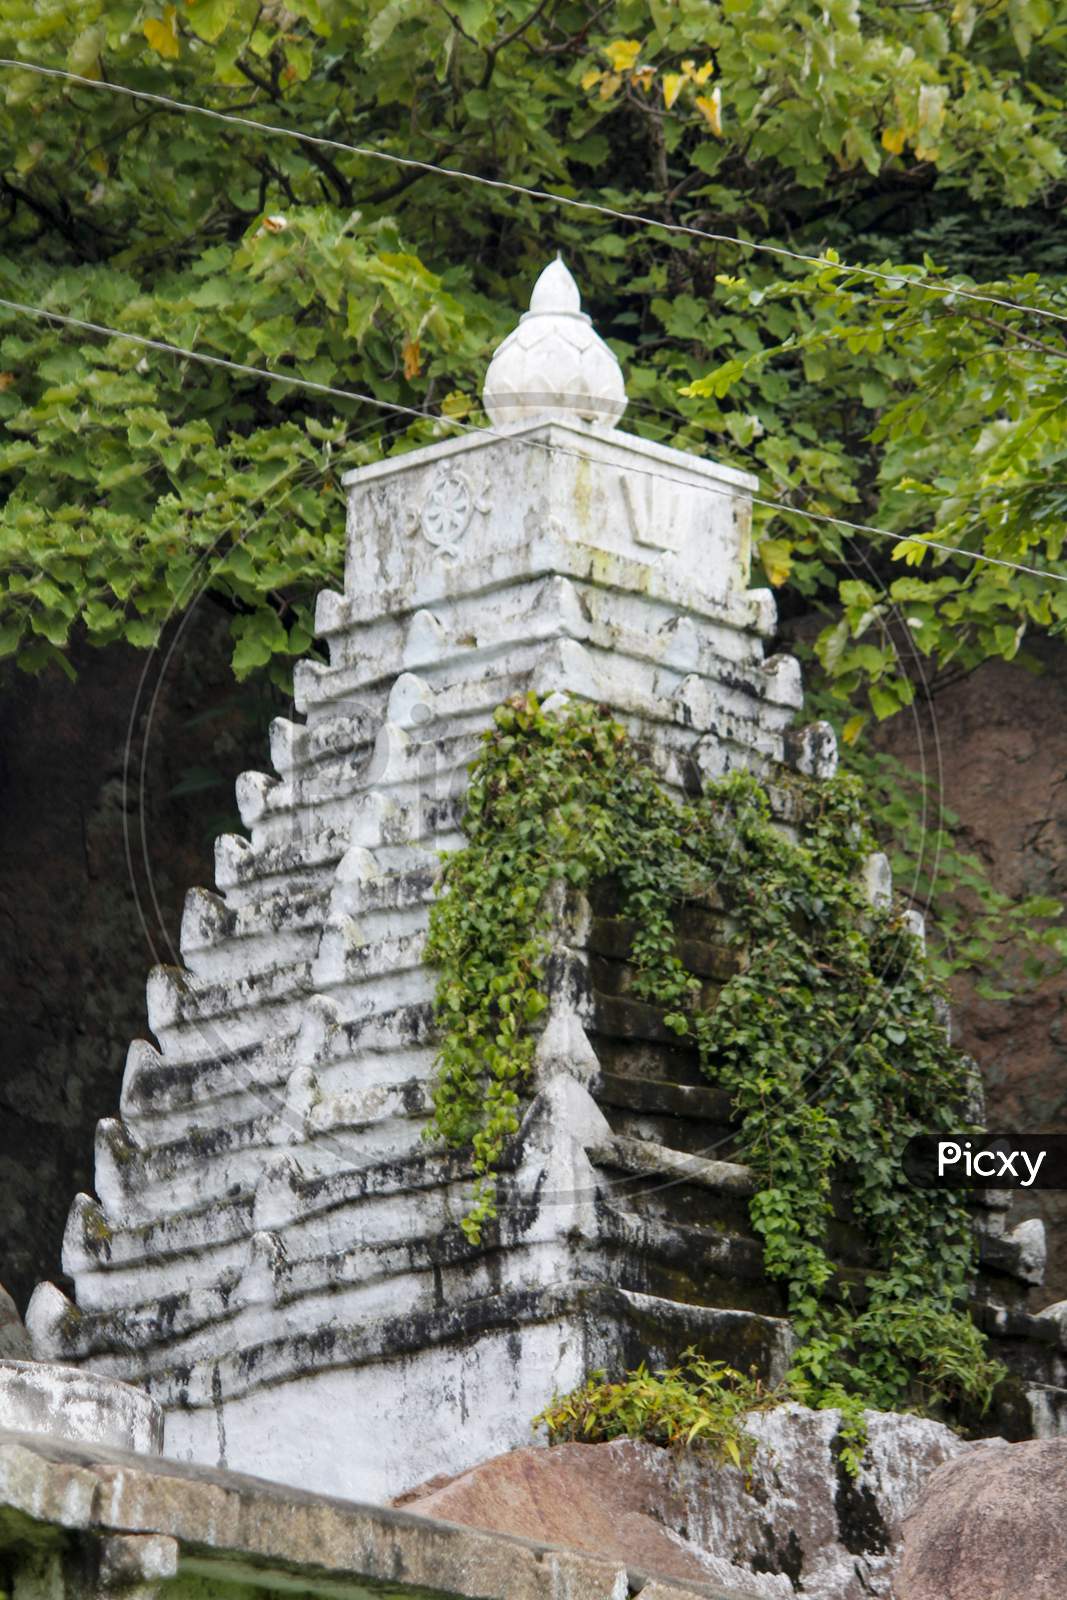 Premises of  Chandragiri chenna kesava swamy temple